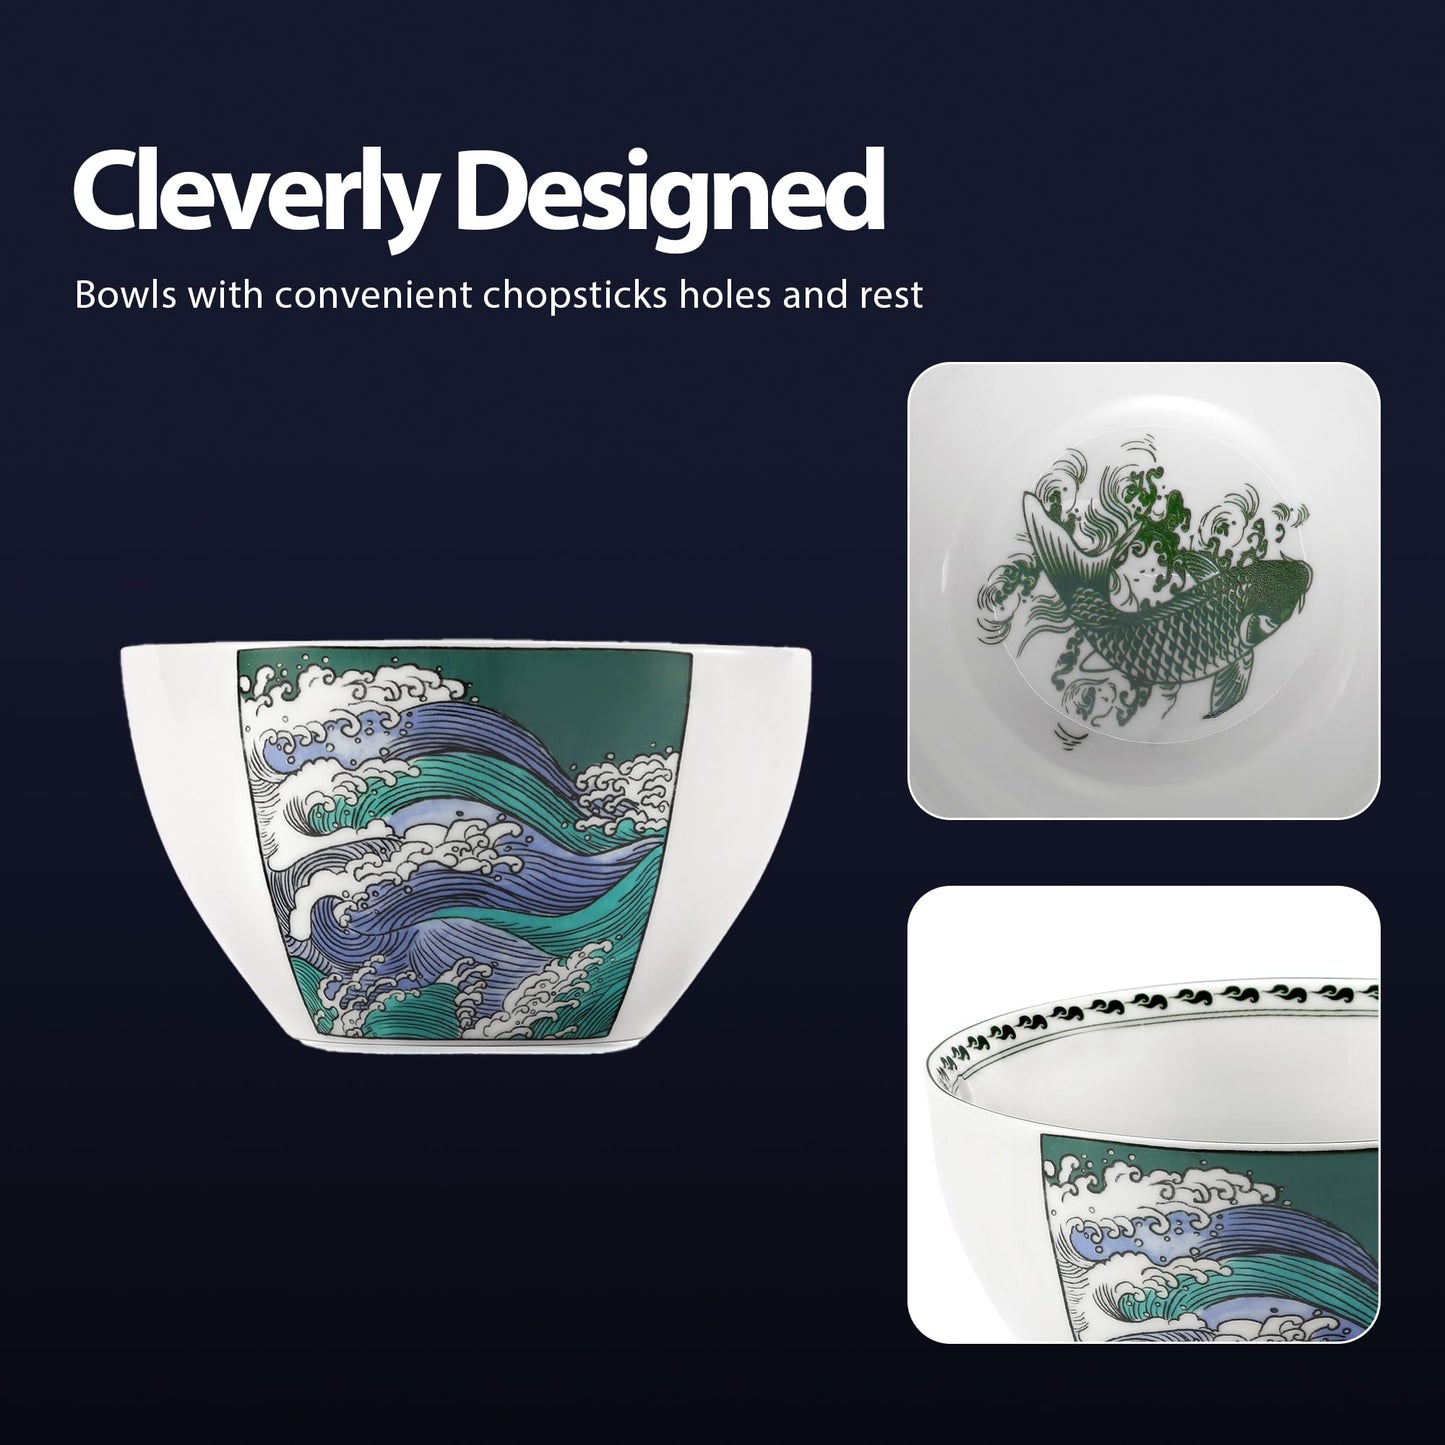 Wave Ceramic Ramen Bowl With Reusable Stainless Steel Chopsticks